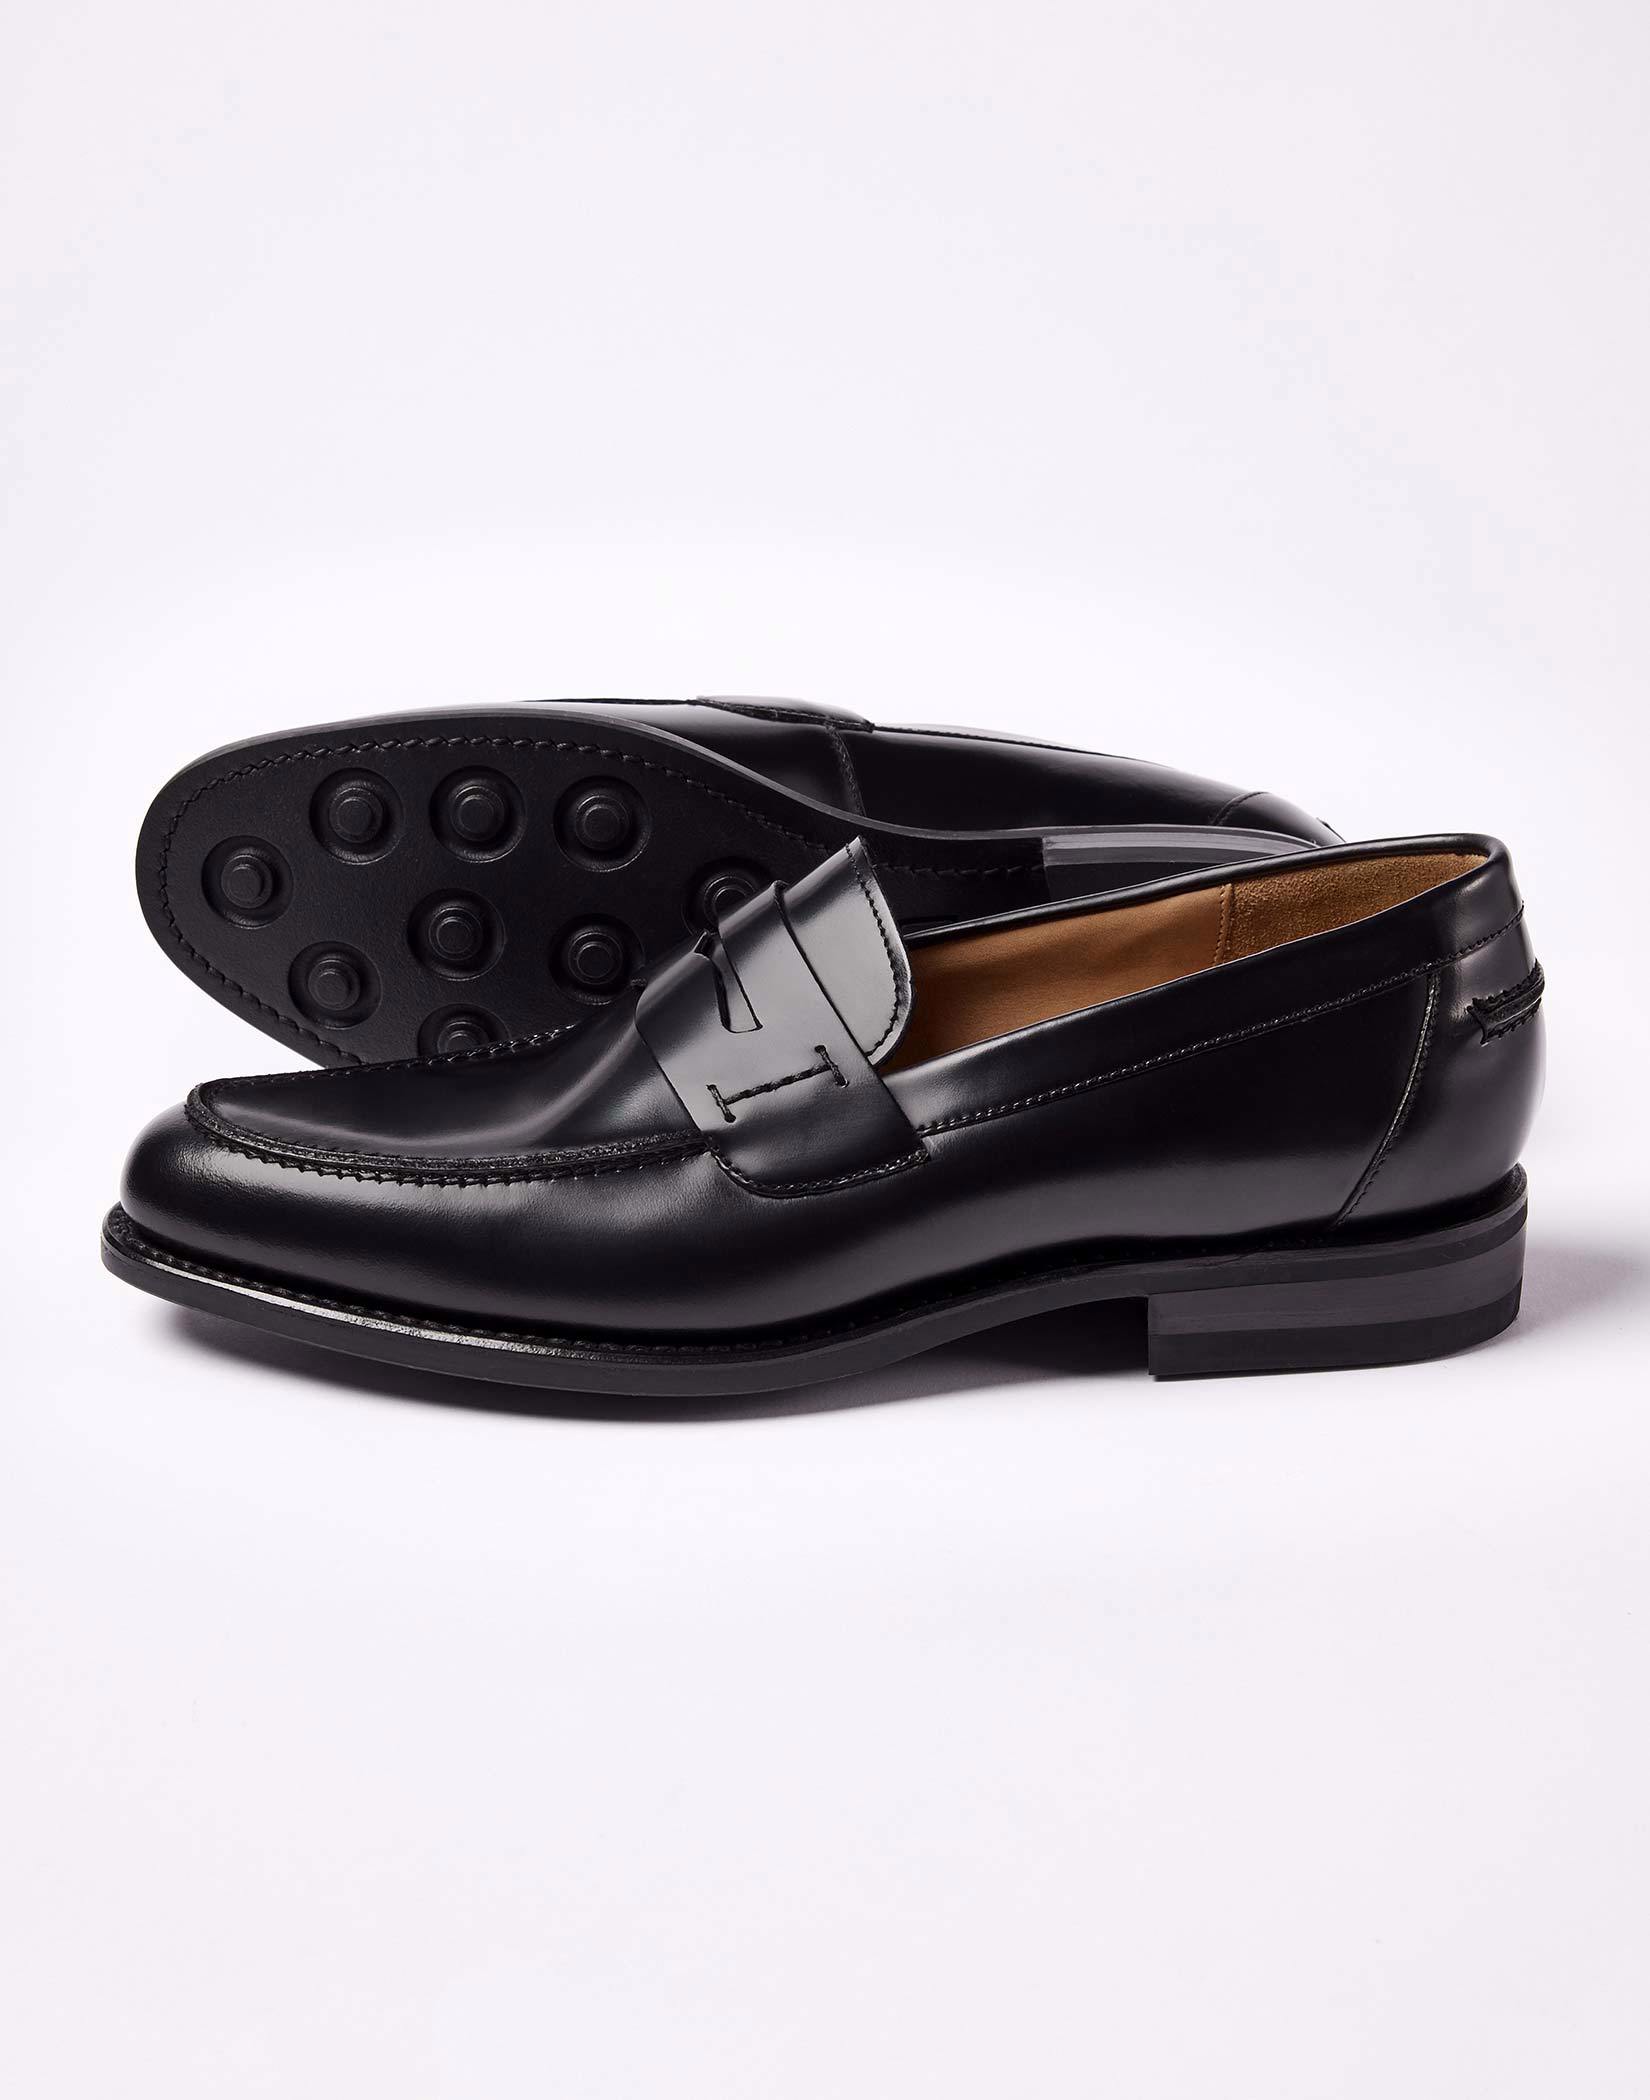 Sebago 'Dan' Penny Loafer in Black Leather – Universal Works